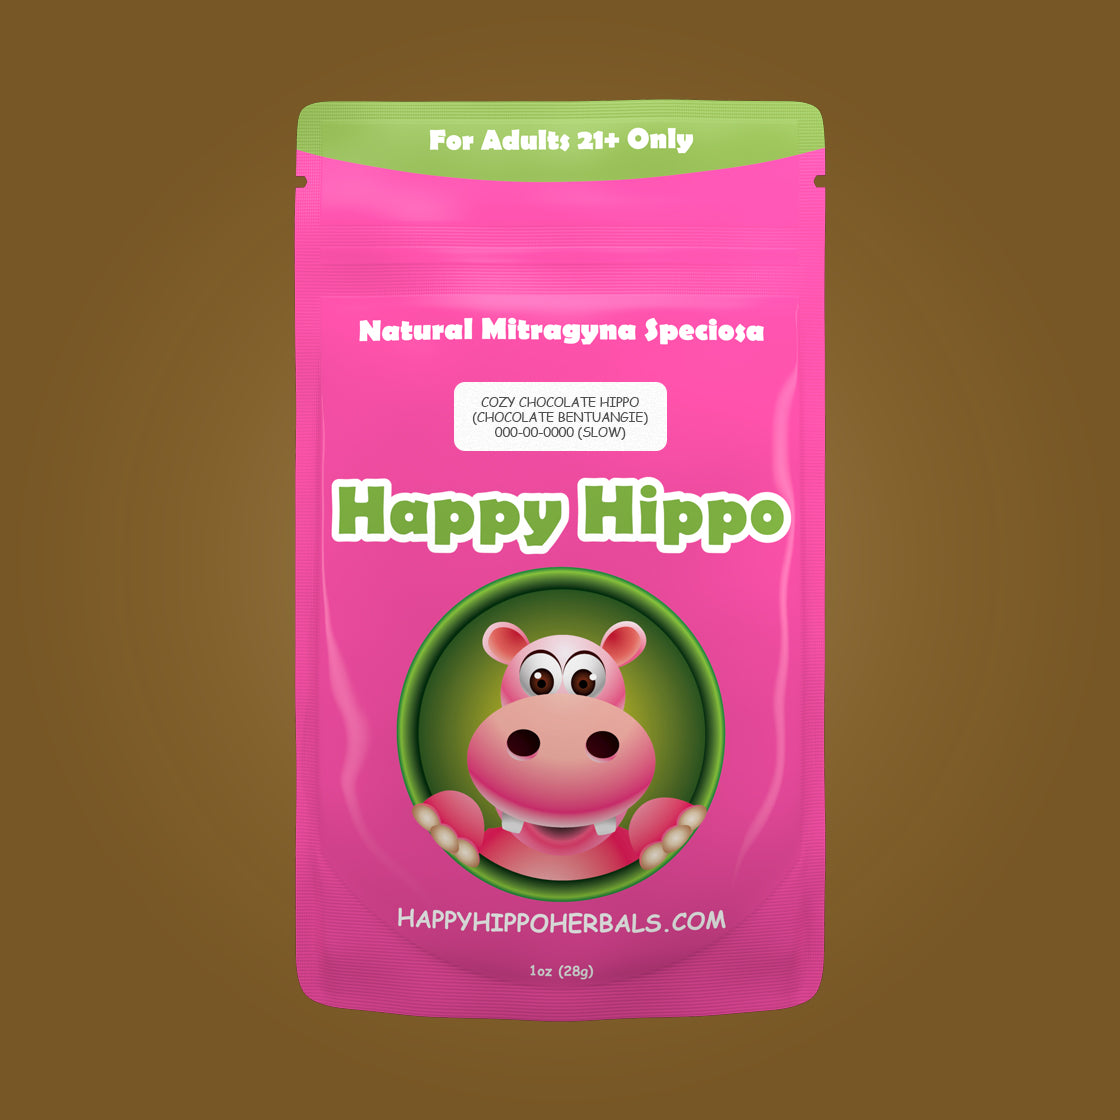 Product Image depicting a 1oz bag of Happy Hippo Chocolate Bentuangie Kratom Powder (Mitragyna Speciosa).